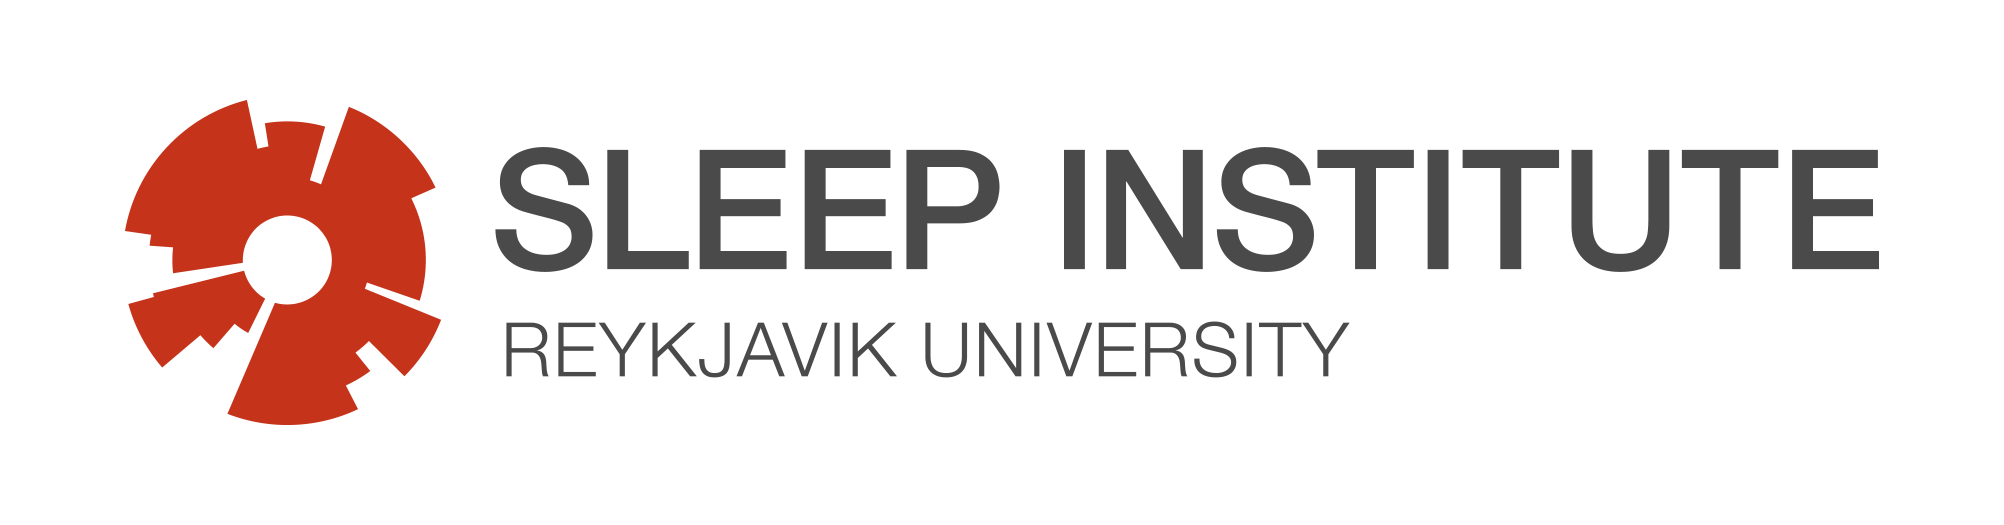 Reykjavik University Sleep Institute (RUSI) - Reykjavik University